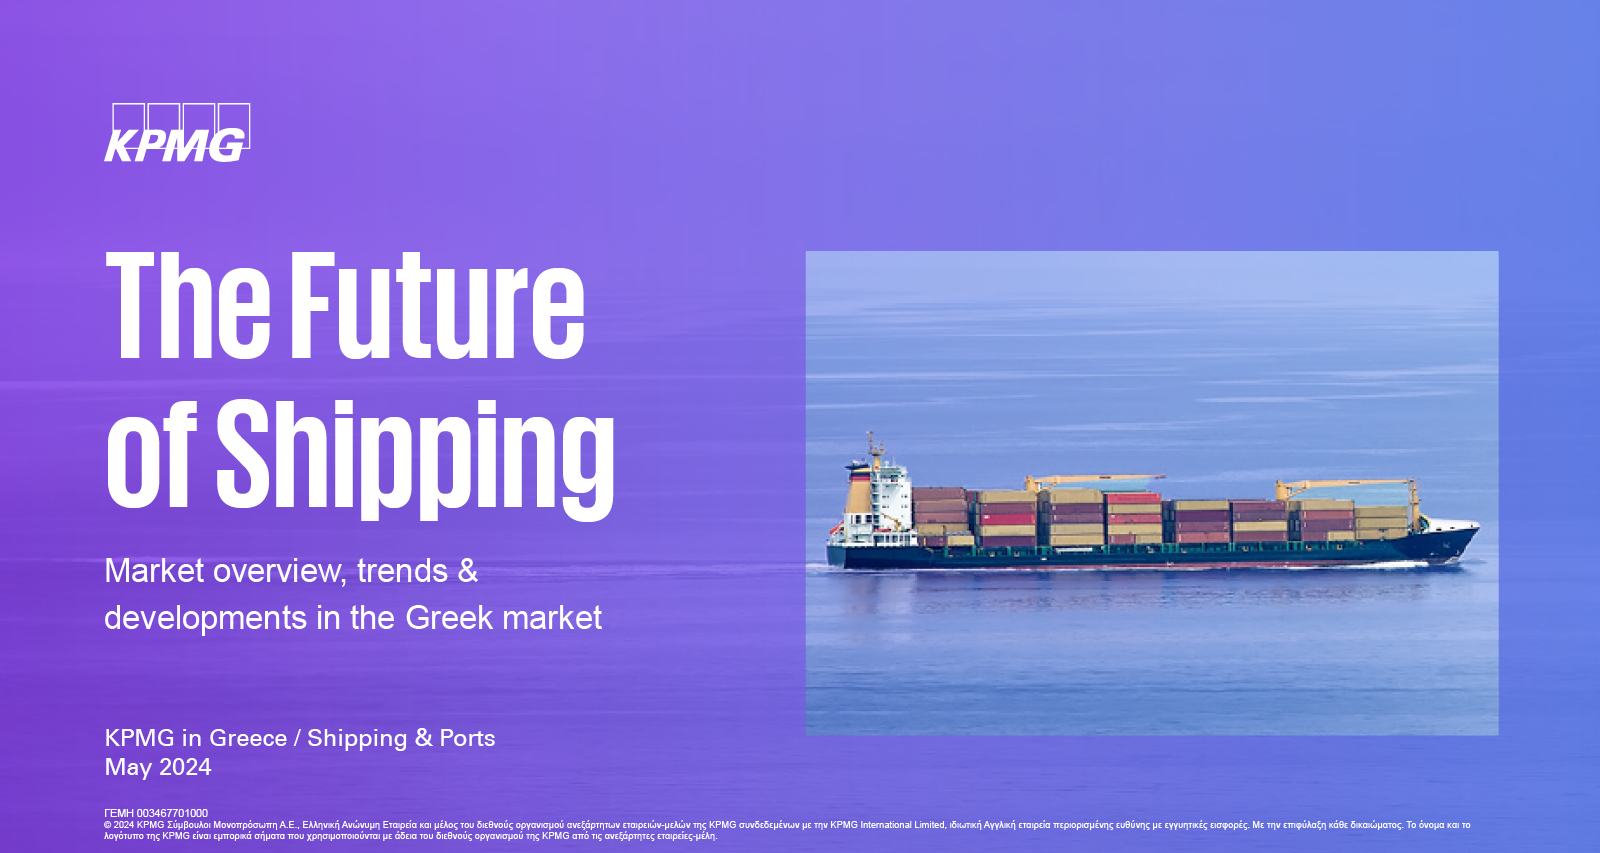 KPMG – The Future of Shipping: Η Ελλάδα σταθερά ο παγκόσμιος ηγέτης της ναυτιλίας και το 2024